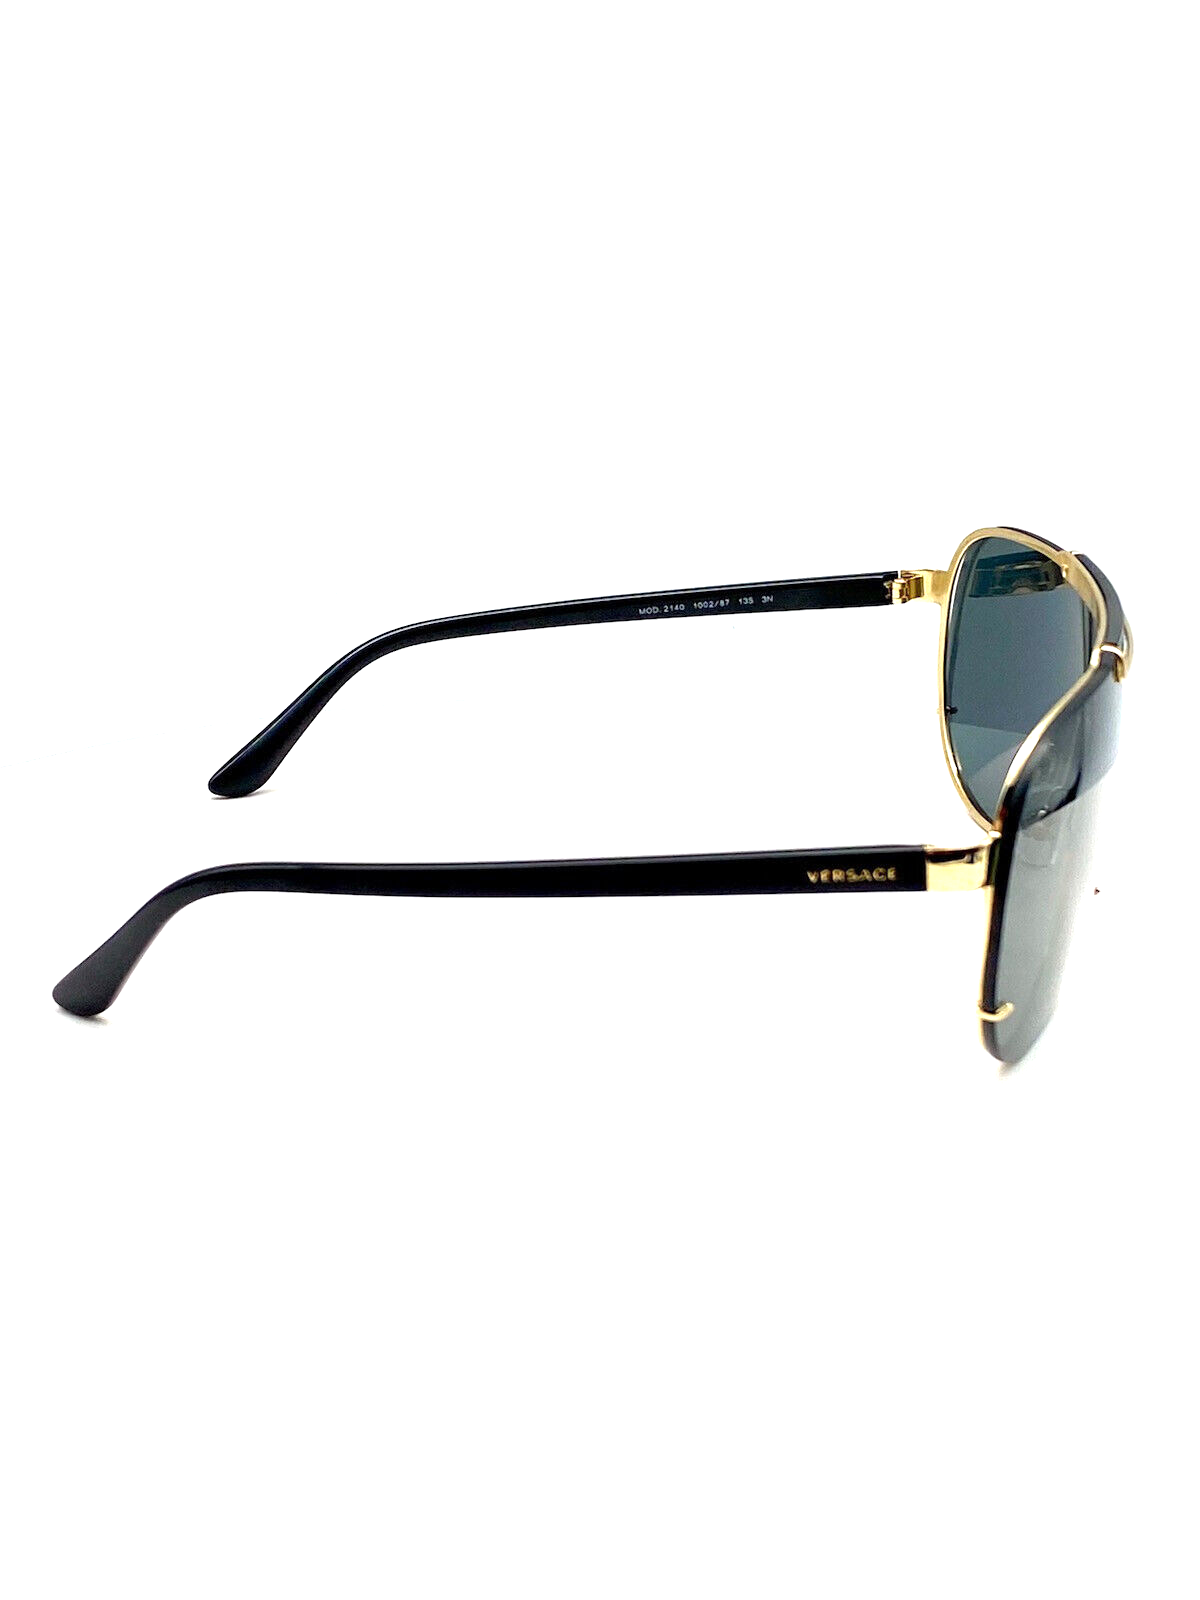 Versace VE2140 100287 Black-Gold/Gray Metal Men's Sunglasses